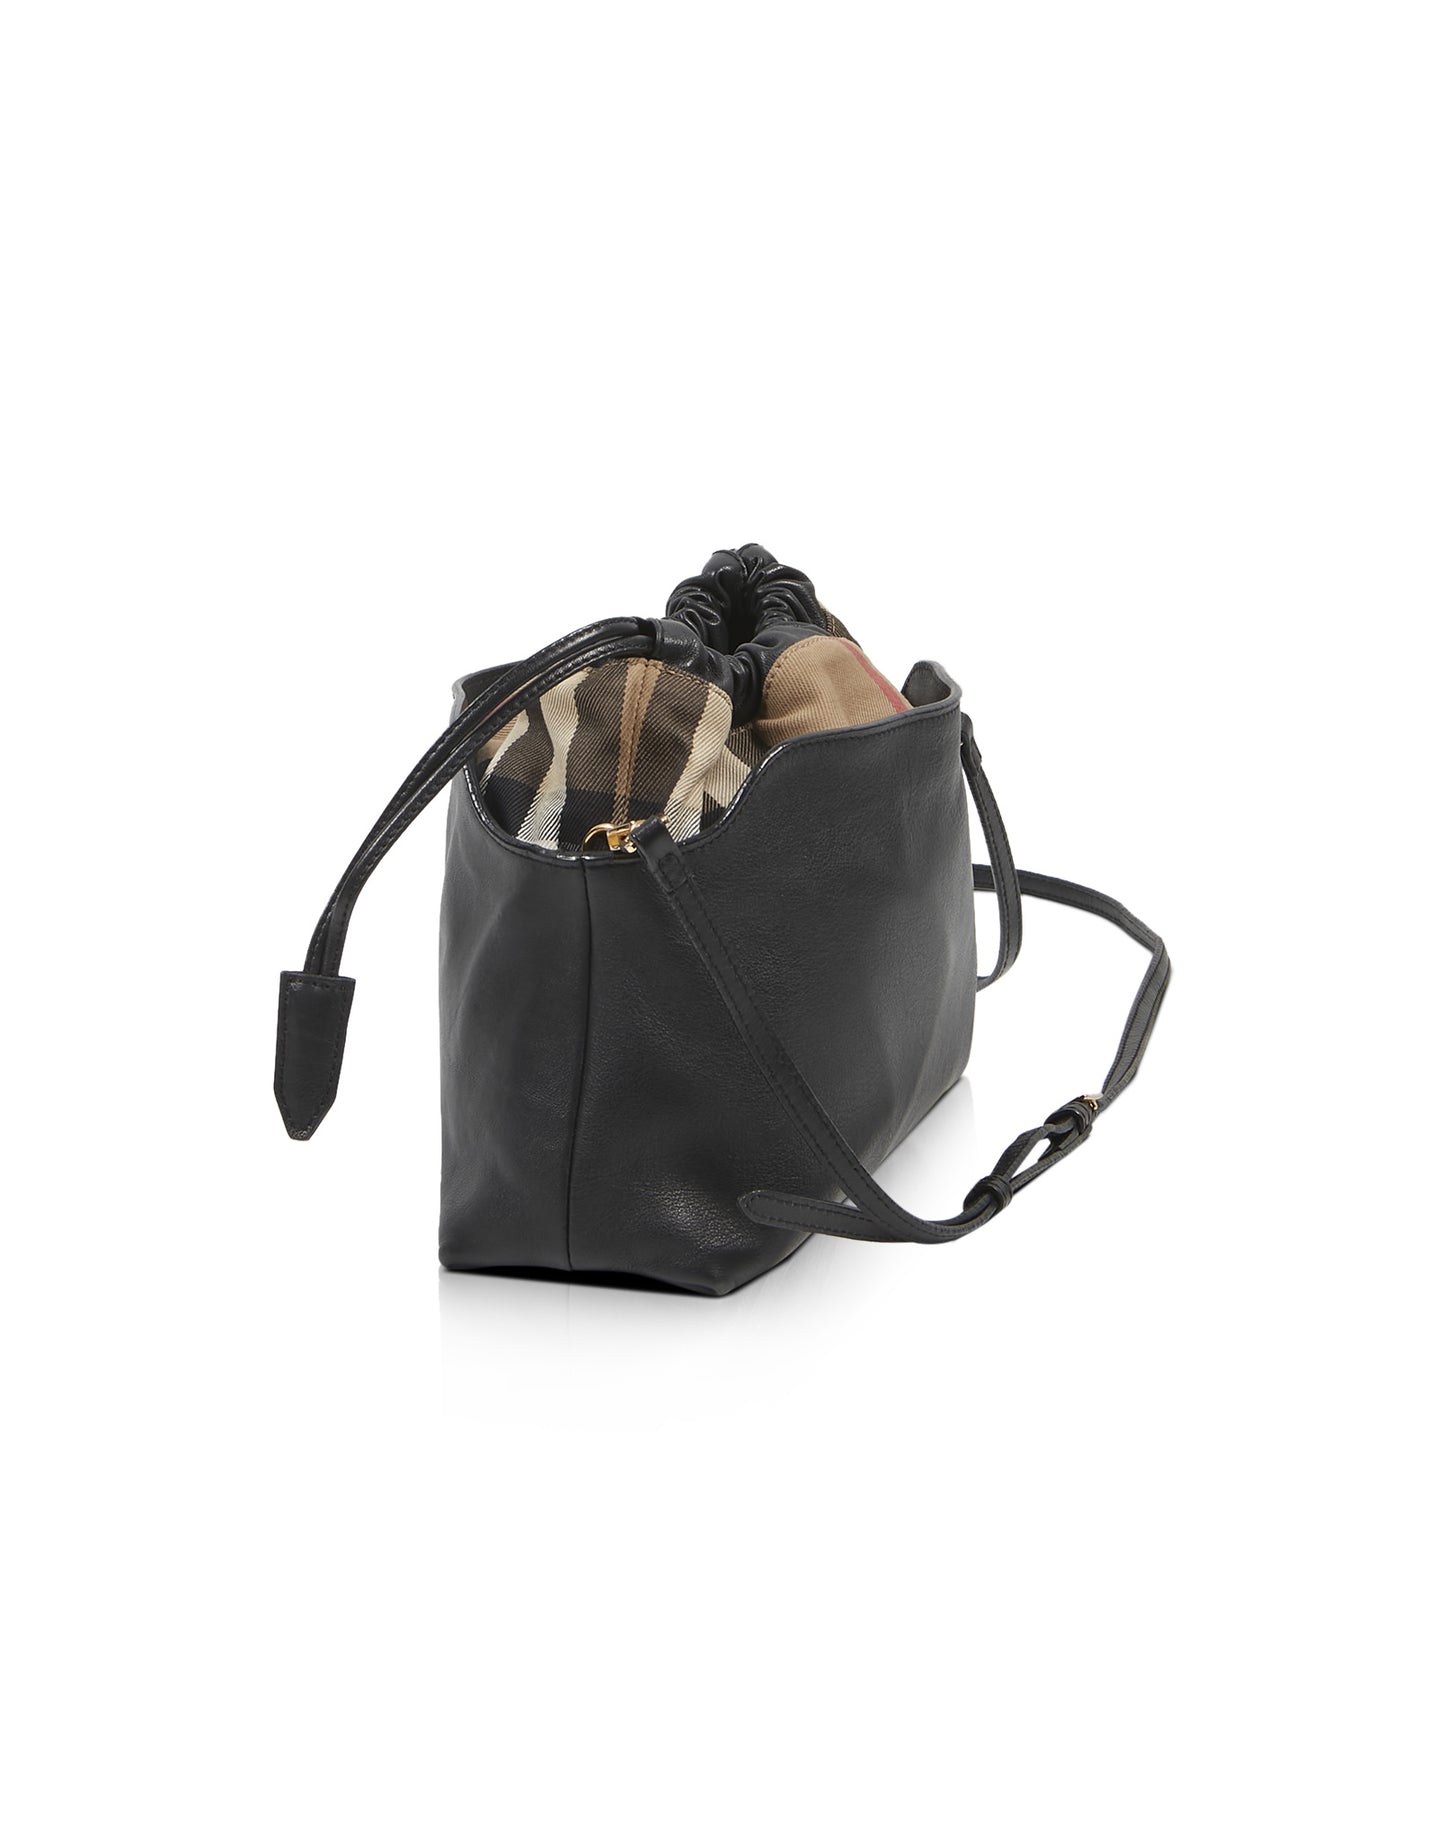 Burberry Black Leather and Check Little Crush Drawstring Shoulder Bag